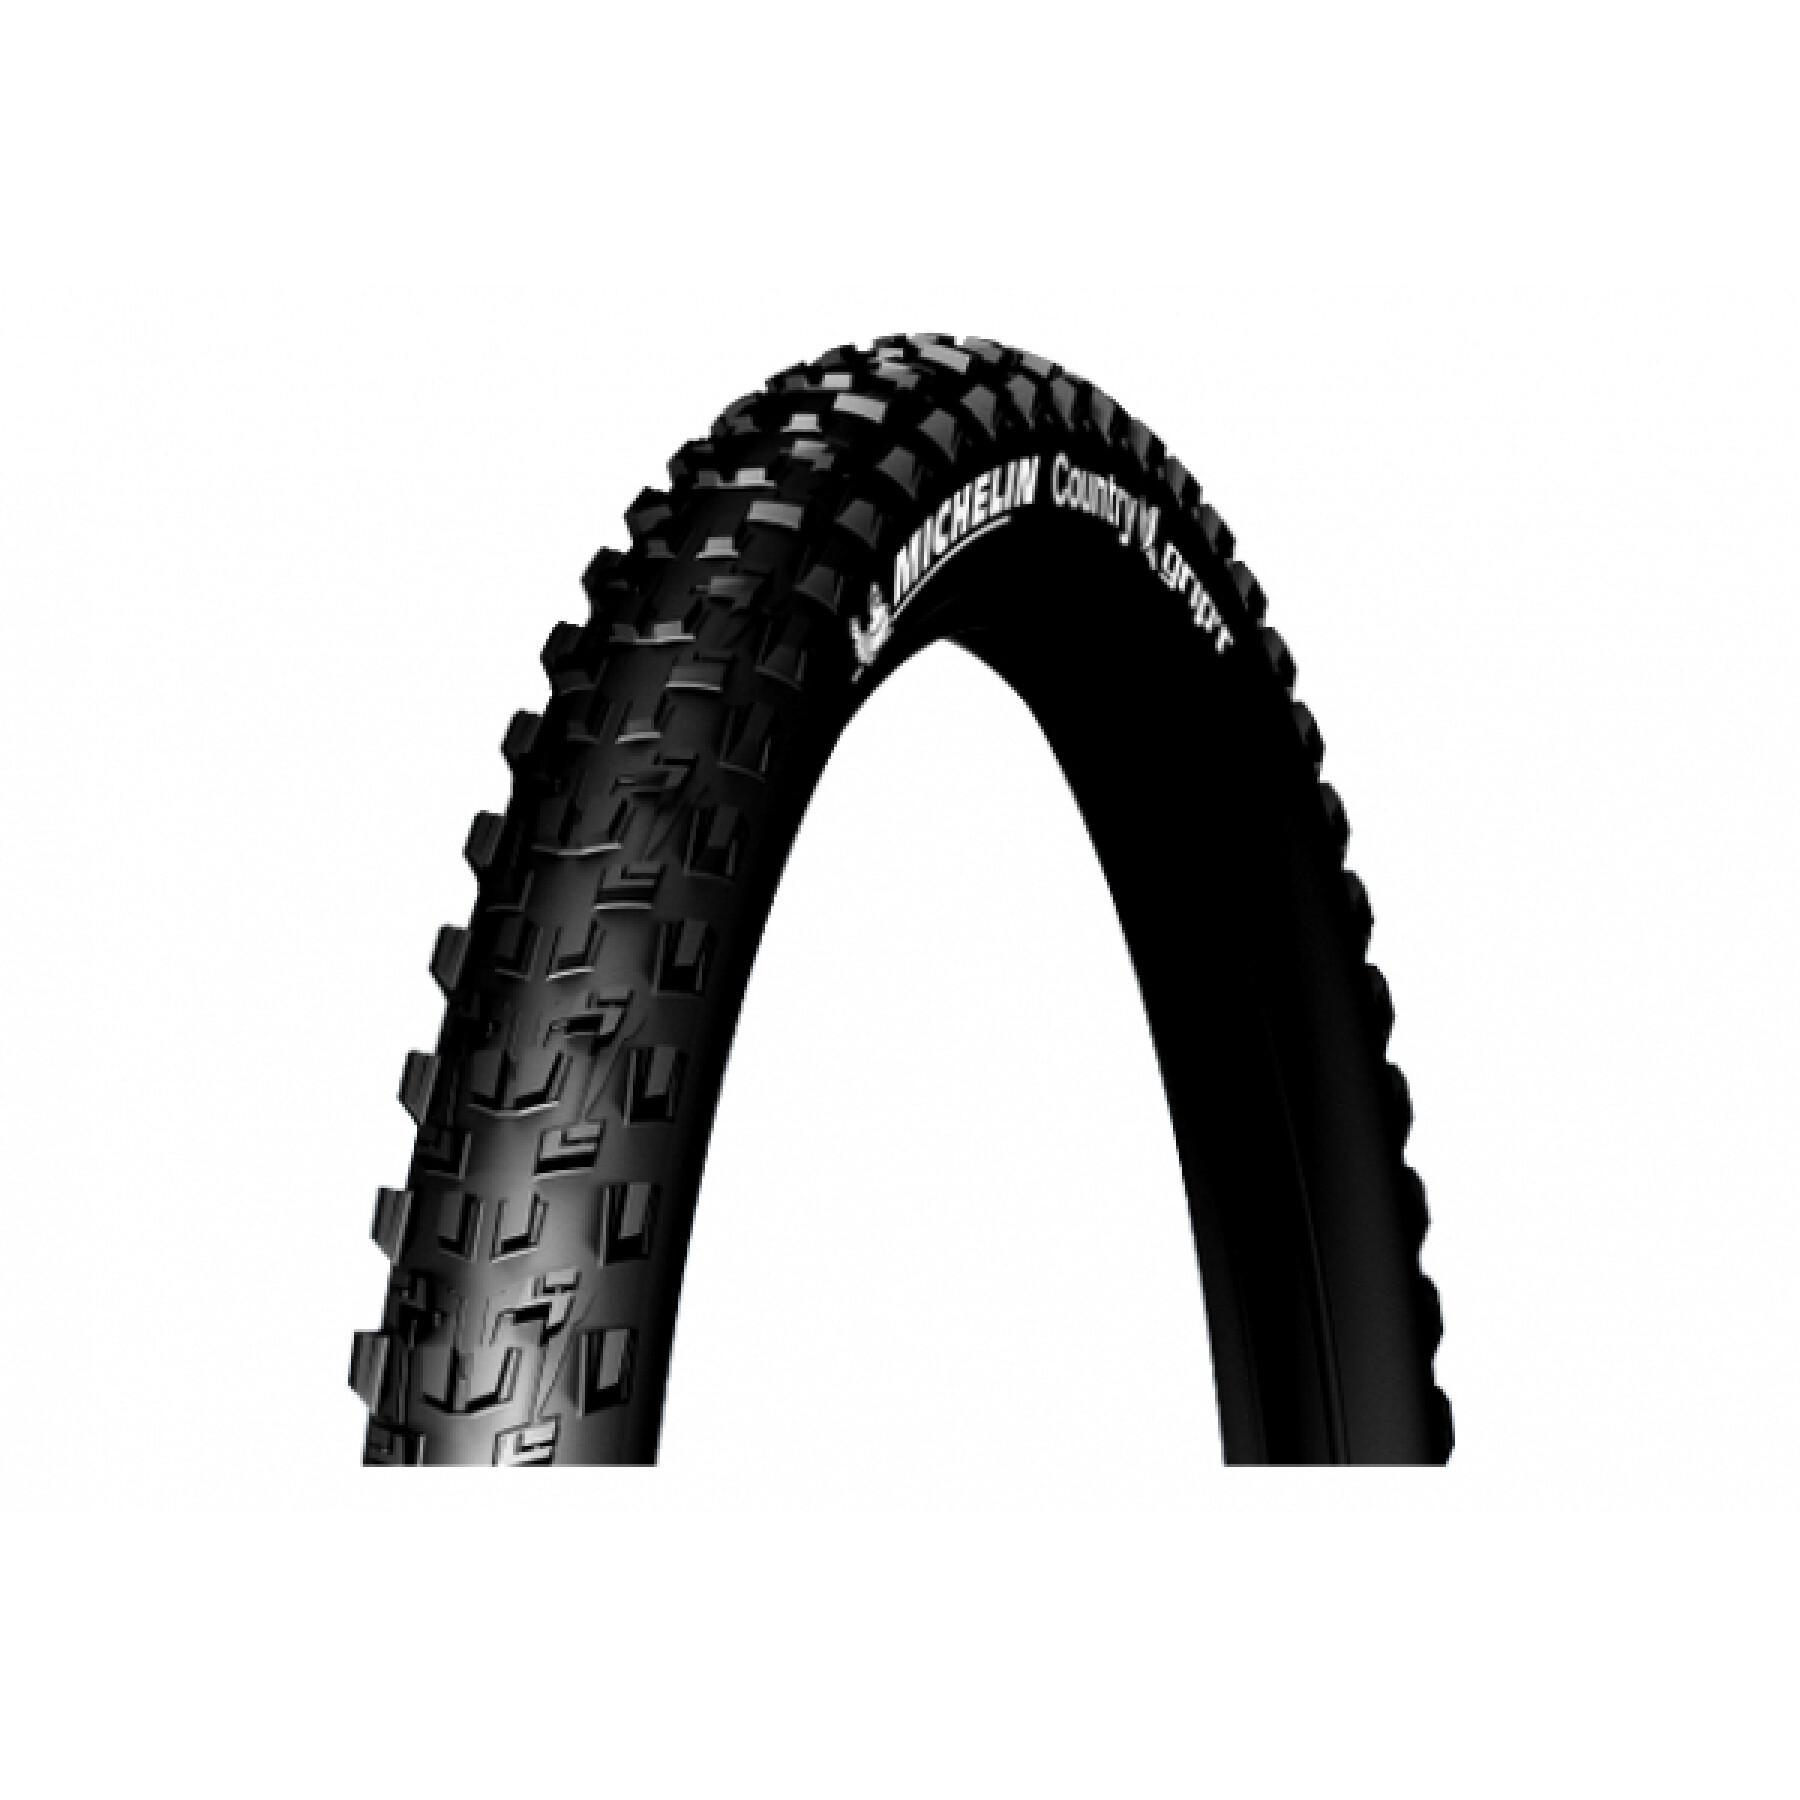 Neumático rígido Michelin Country acces line 29 x 2.10 54-622